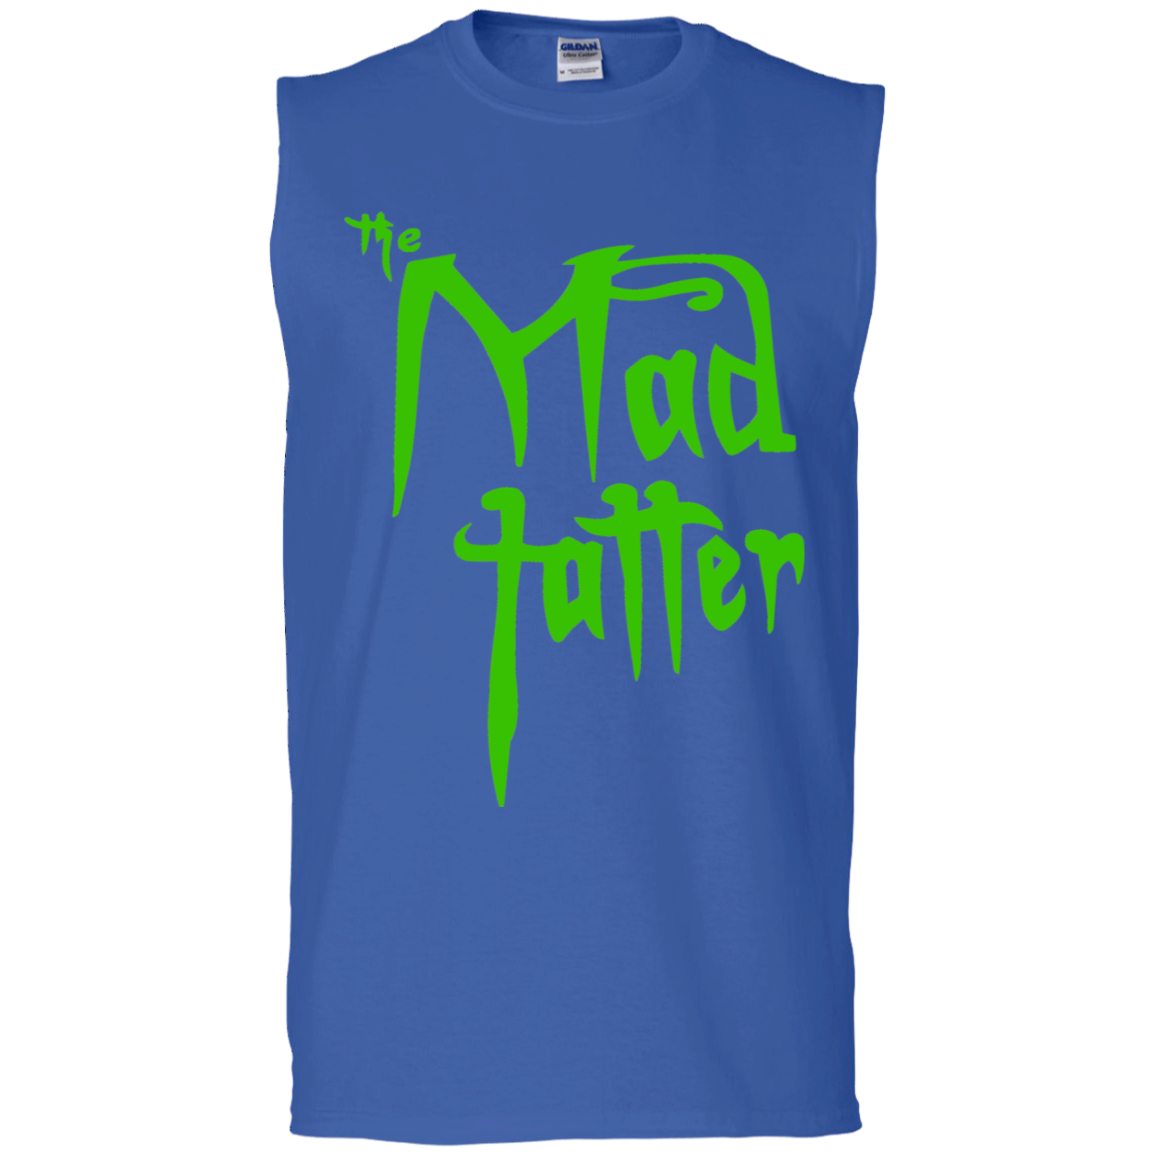 Men's Mad Tatter Sleeveless T-Shirt - Green Logo